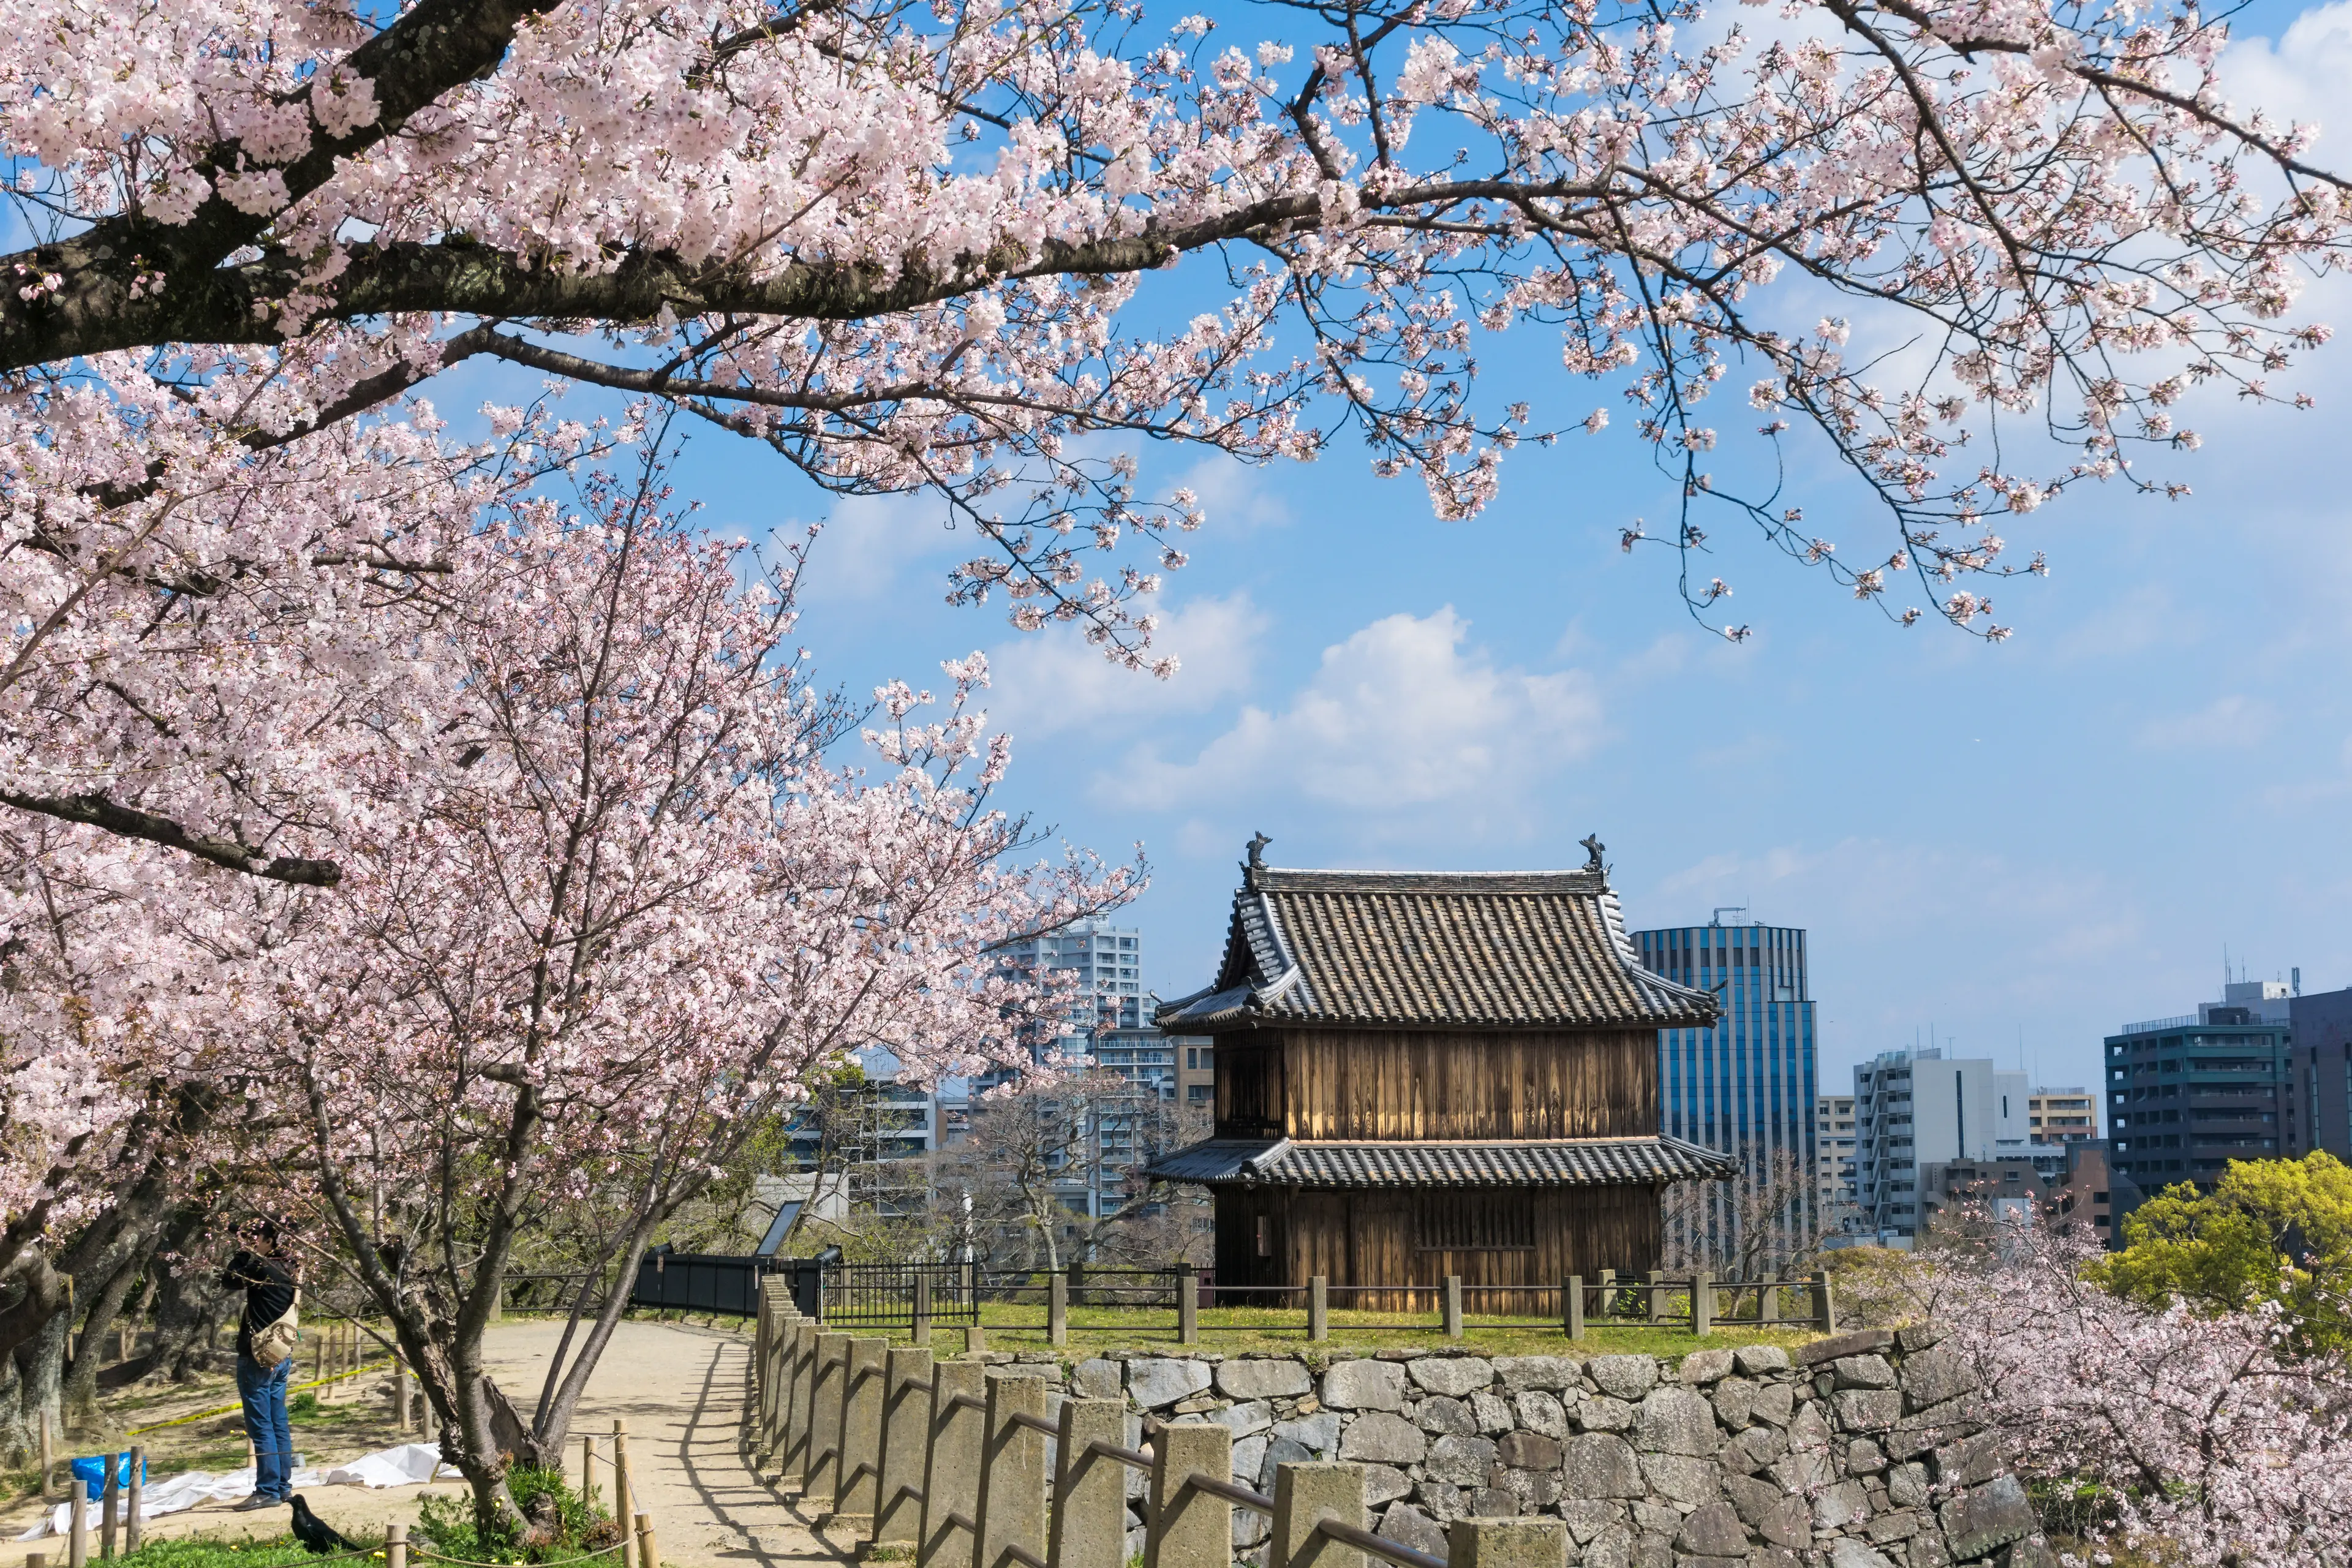 Sakura blooming at the castle